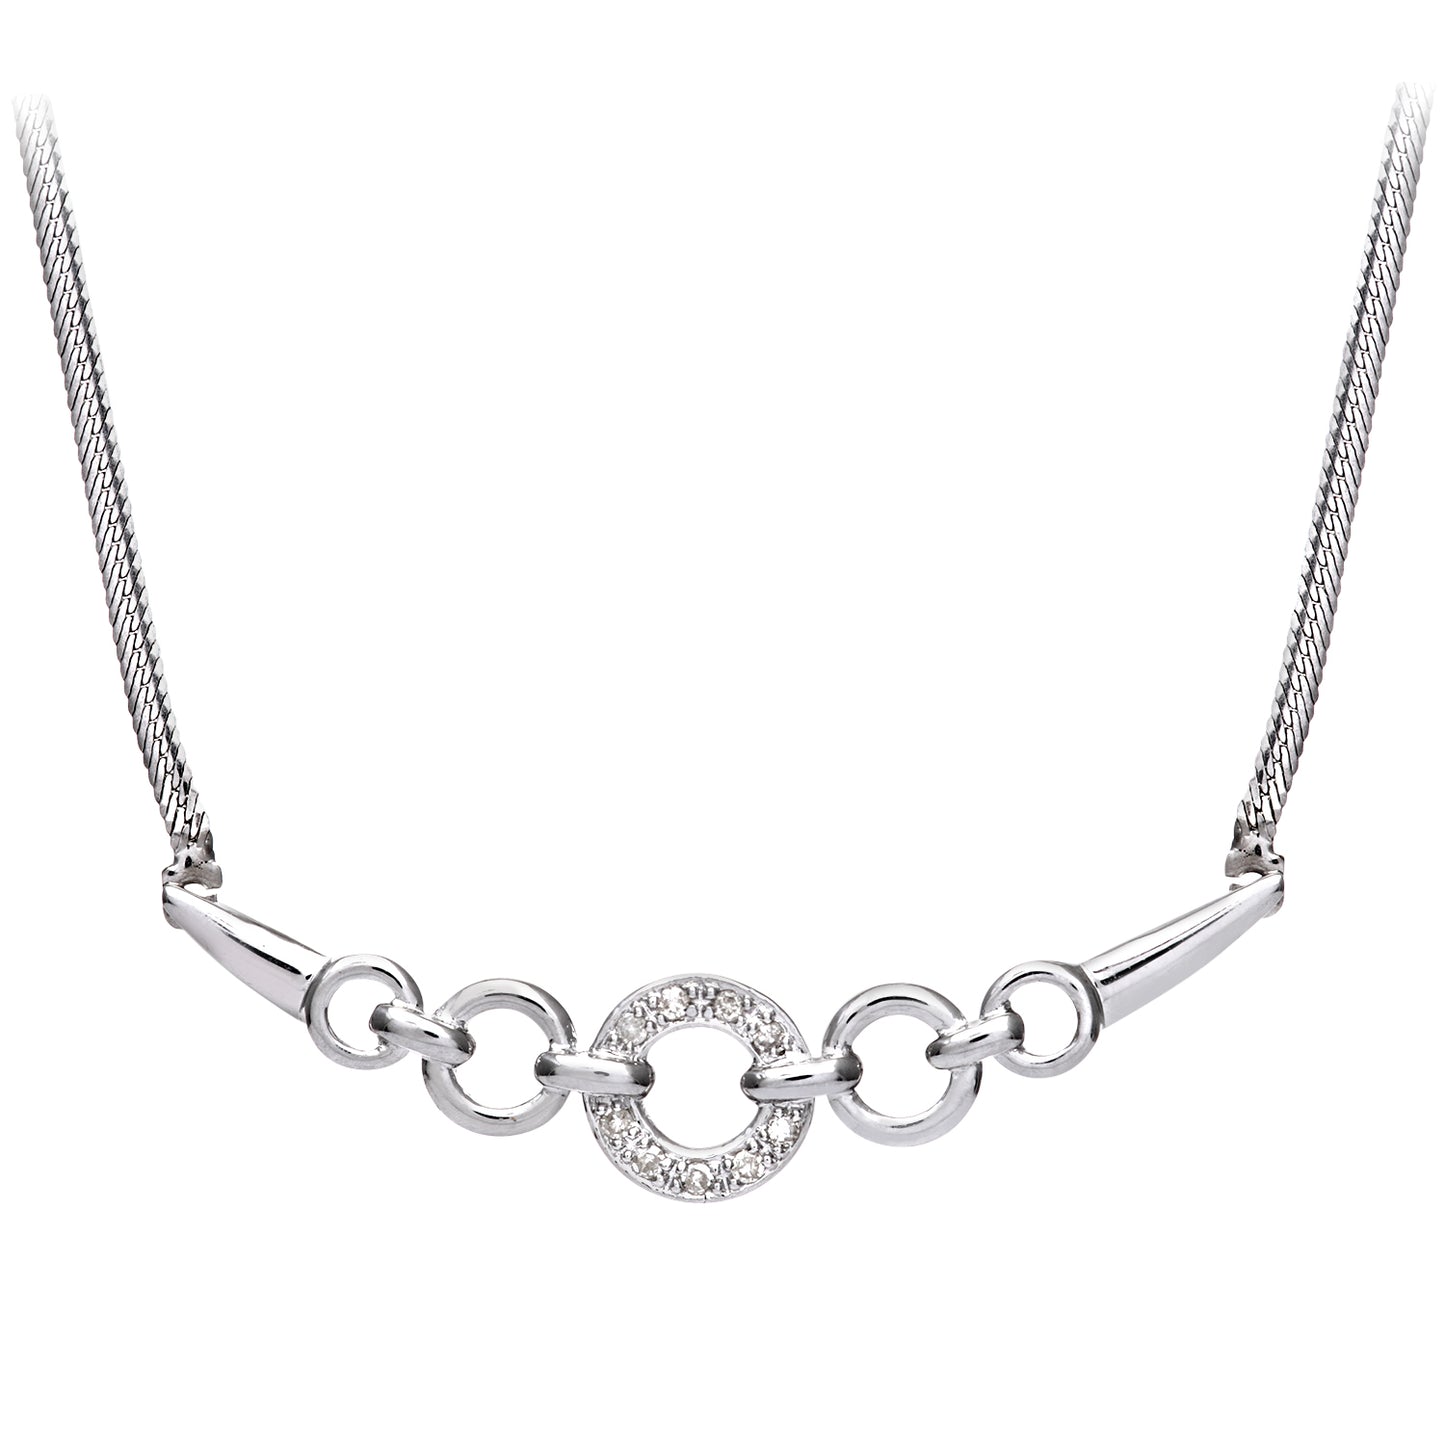 9ct White Gold  5pts Diamond Circle Lavalier Necklace 18 inch - PNEAXL01520W